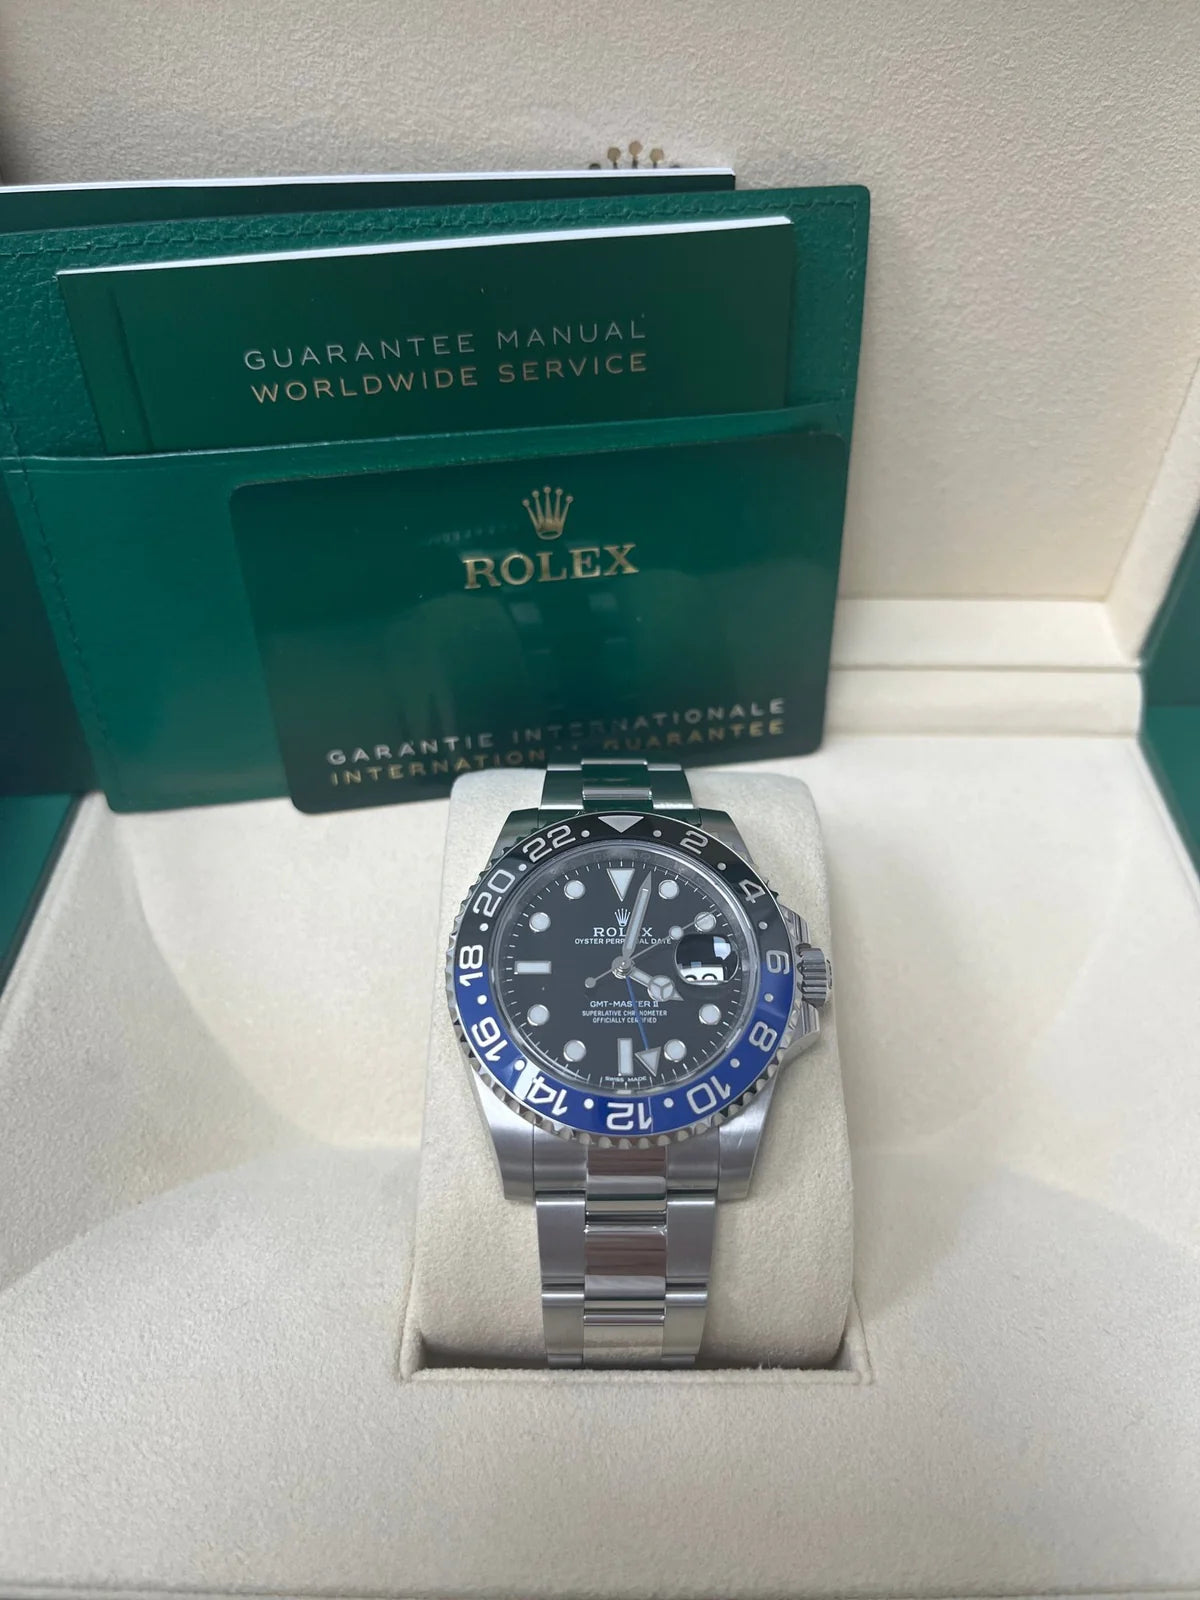 Rolex GMT-Master II 40 Watch - Black and Blue Batman Bezel - Black Dial - Oyster Bracelet (Ref# 126710BLNR)